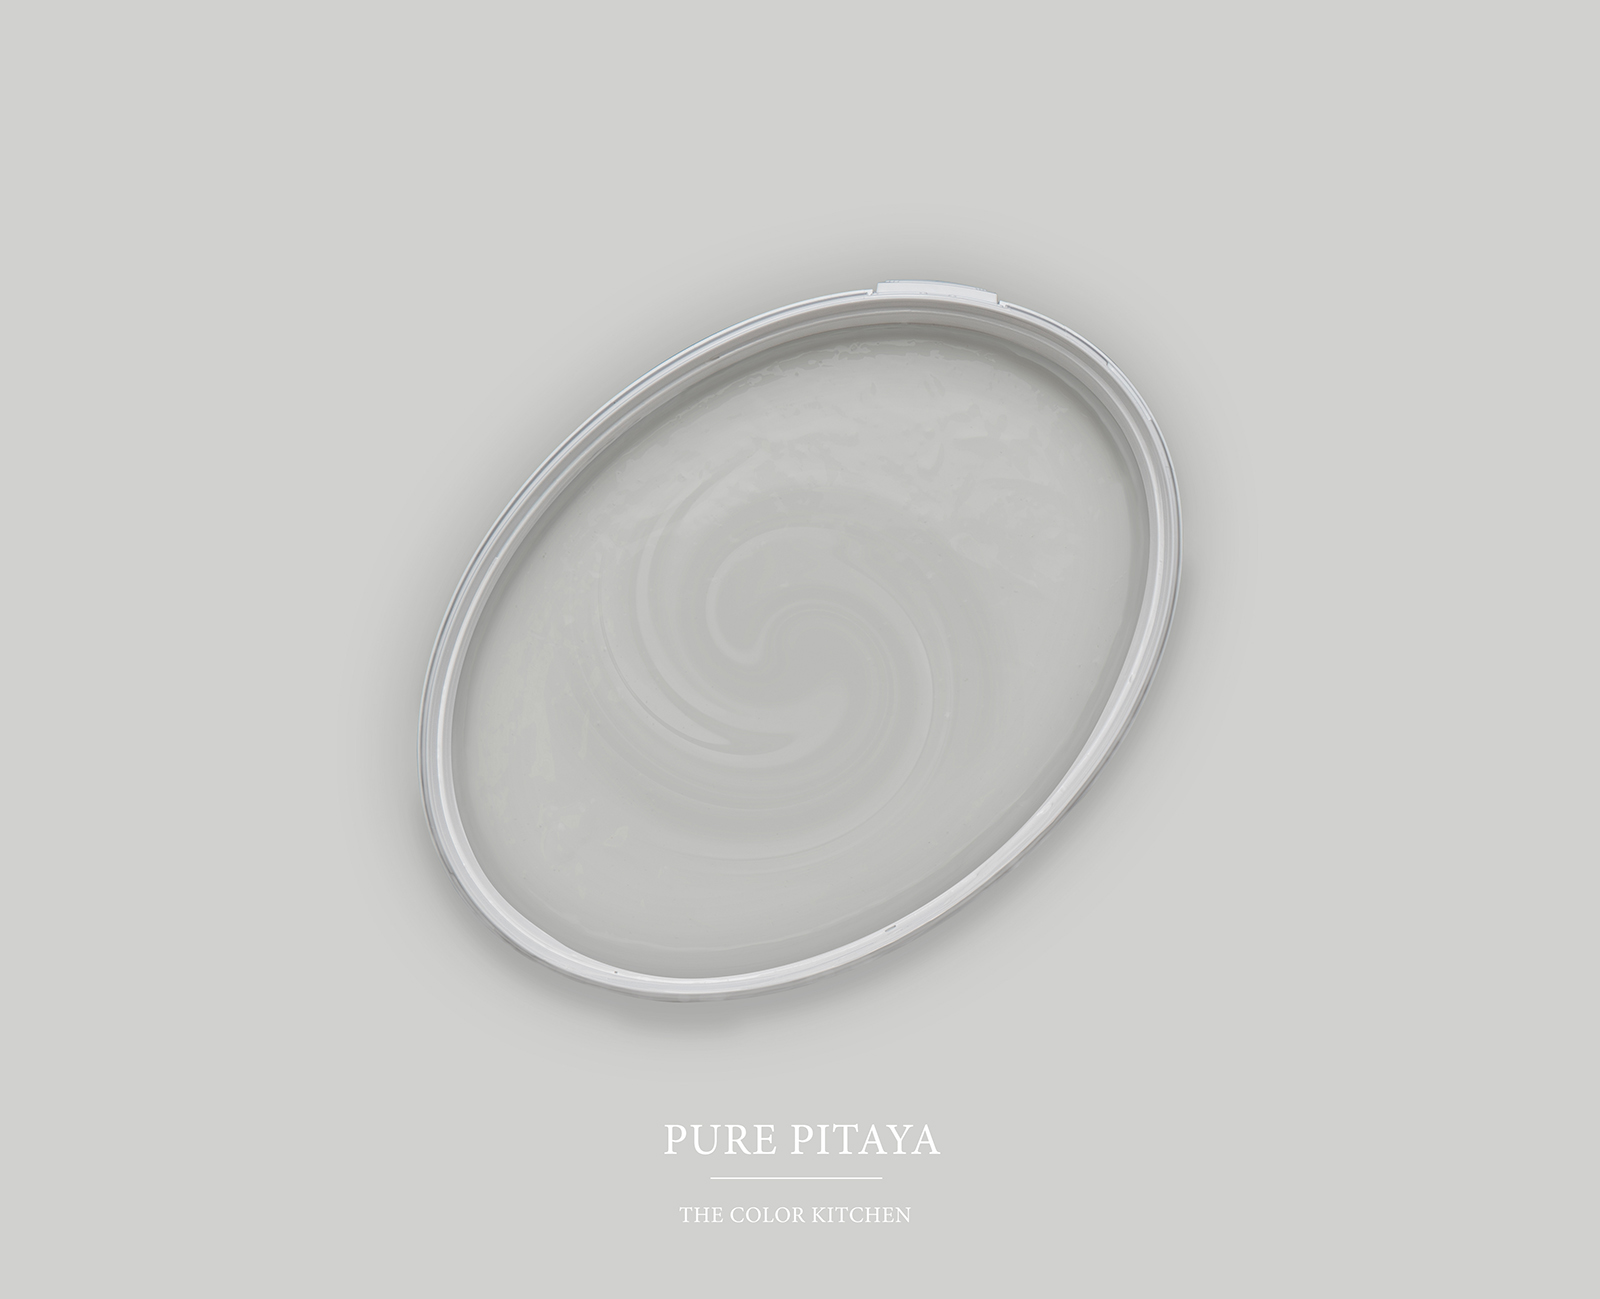         Wandfarbe in bläulichem Grau »Pure Pitaya« TCK1003 – 2,5 Liter
    